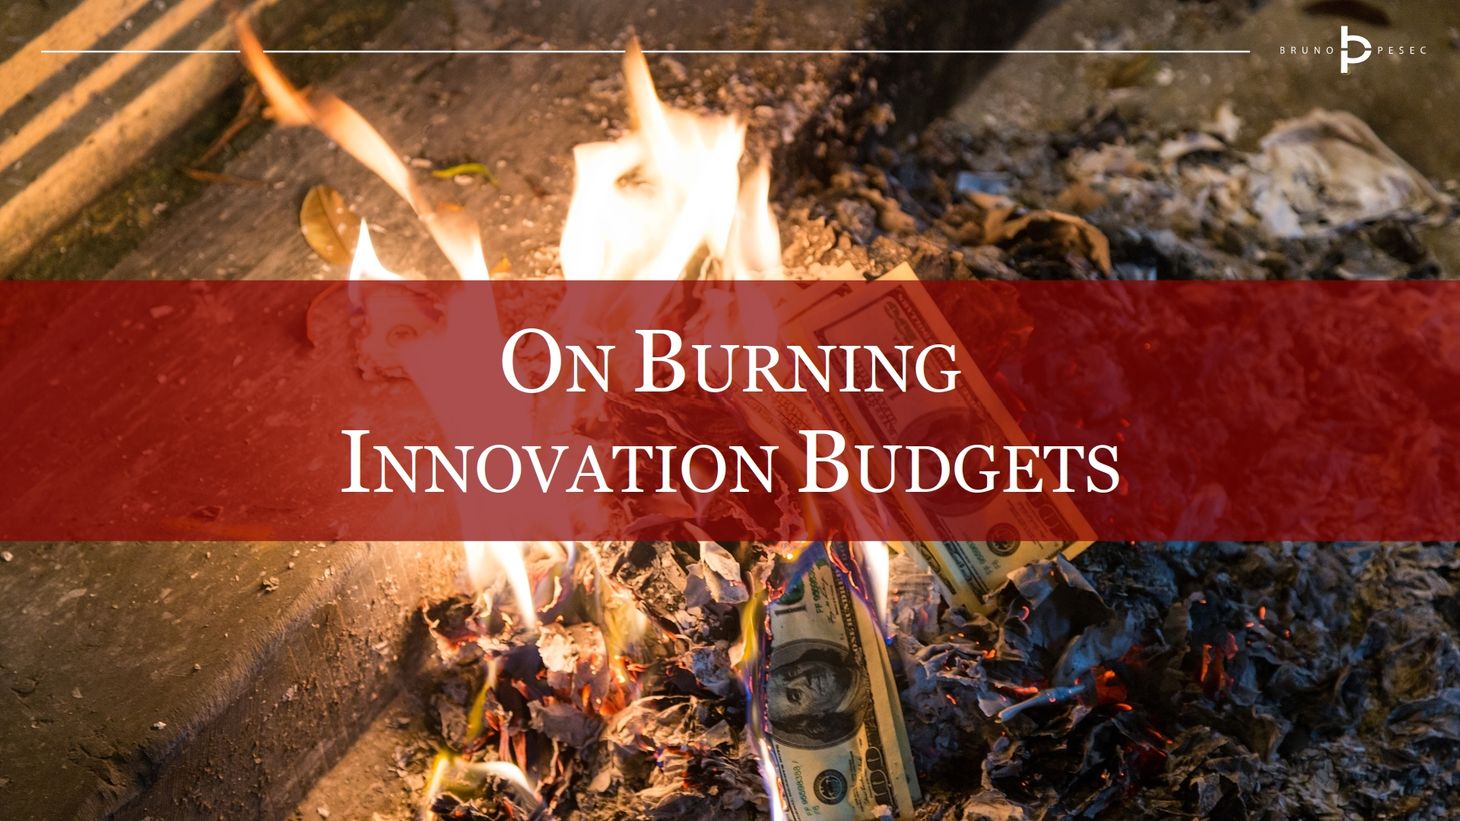 On burning innovation budgets